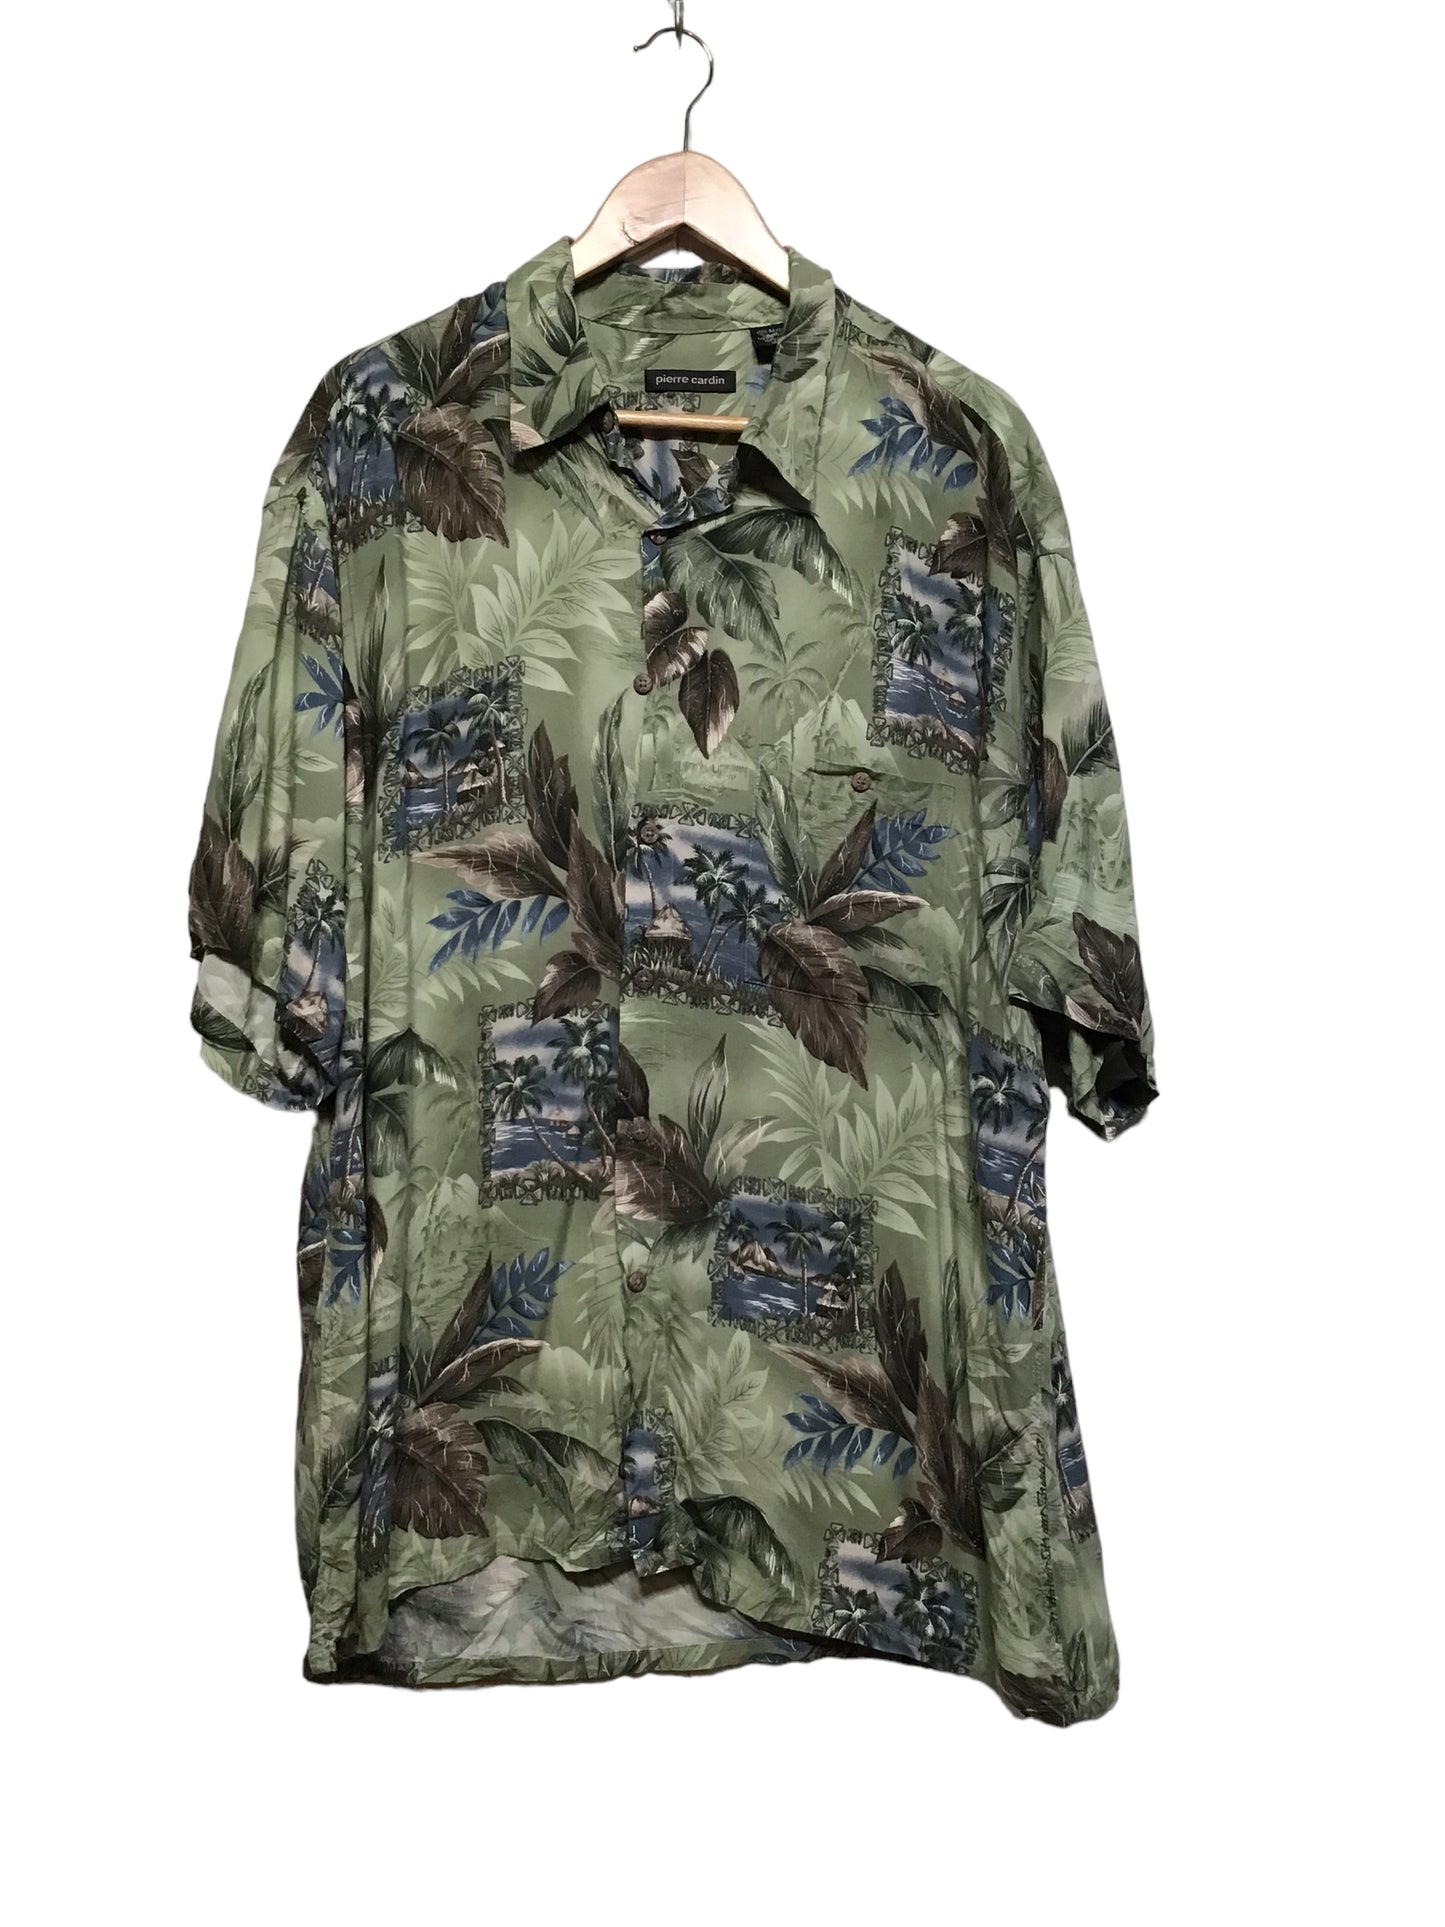 Pierre Cardin Shirt (Size XL)